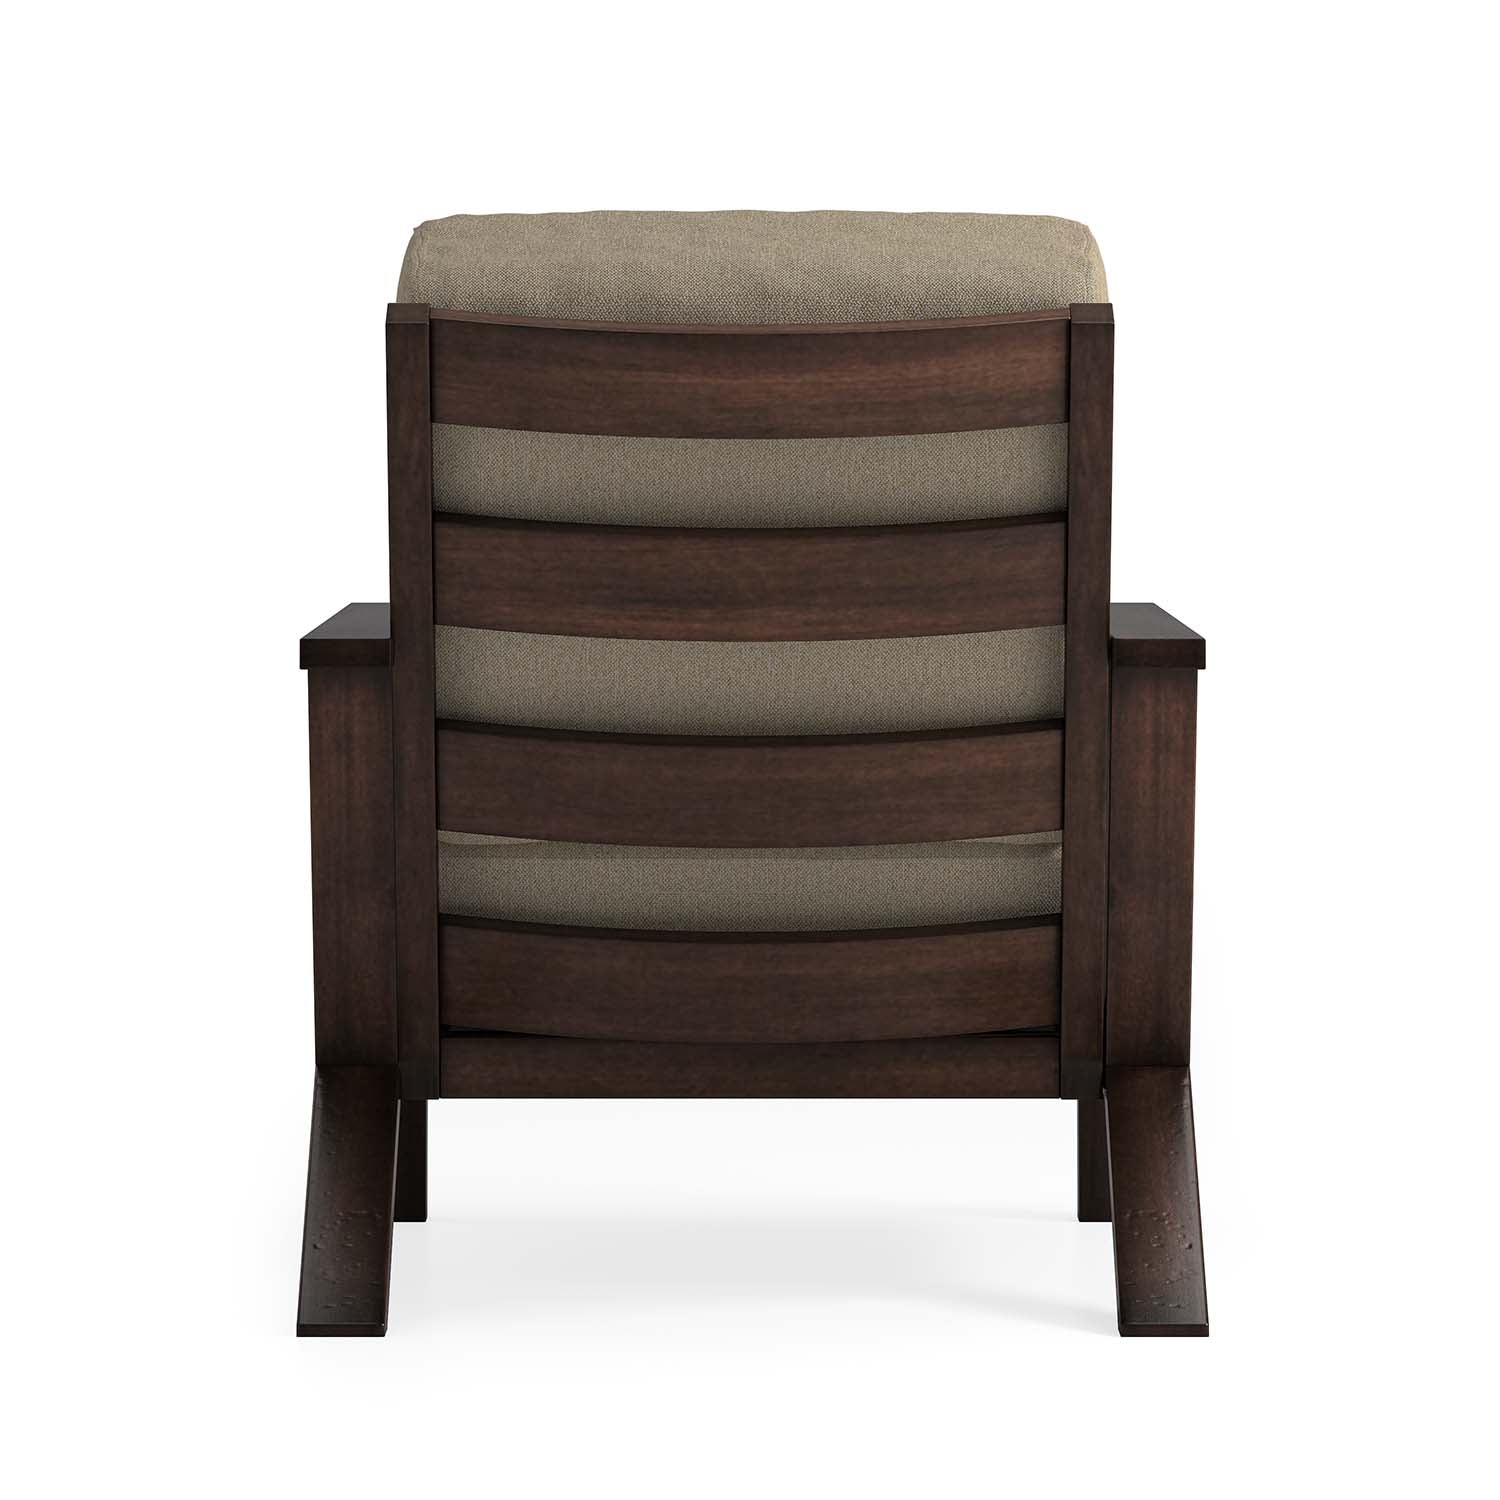 Neuwood Living Boardwalk Lounge Chair back